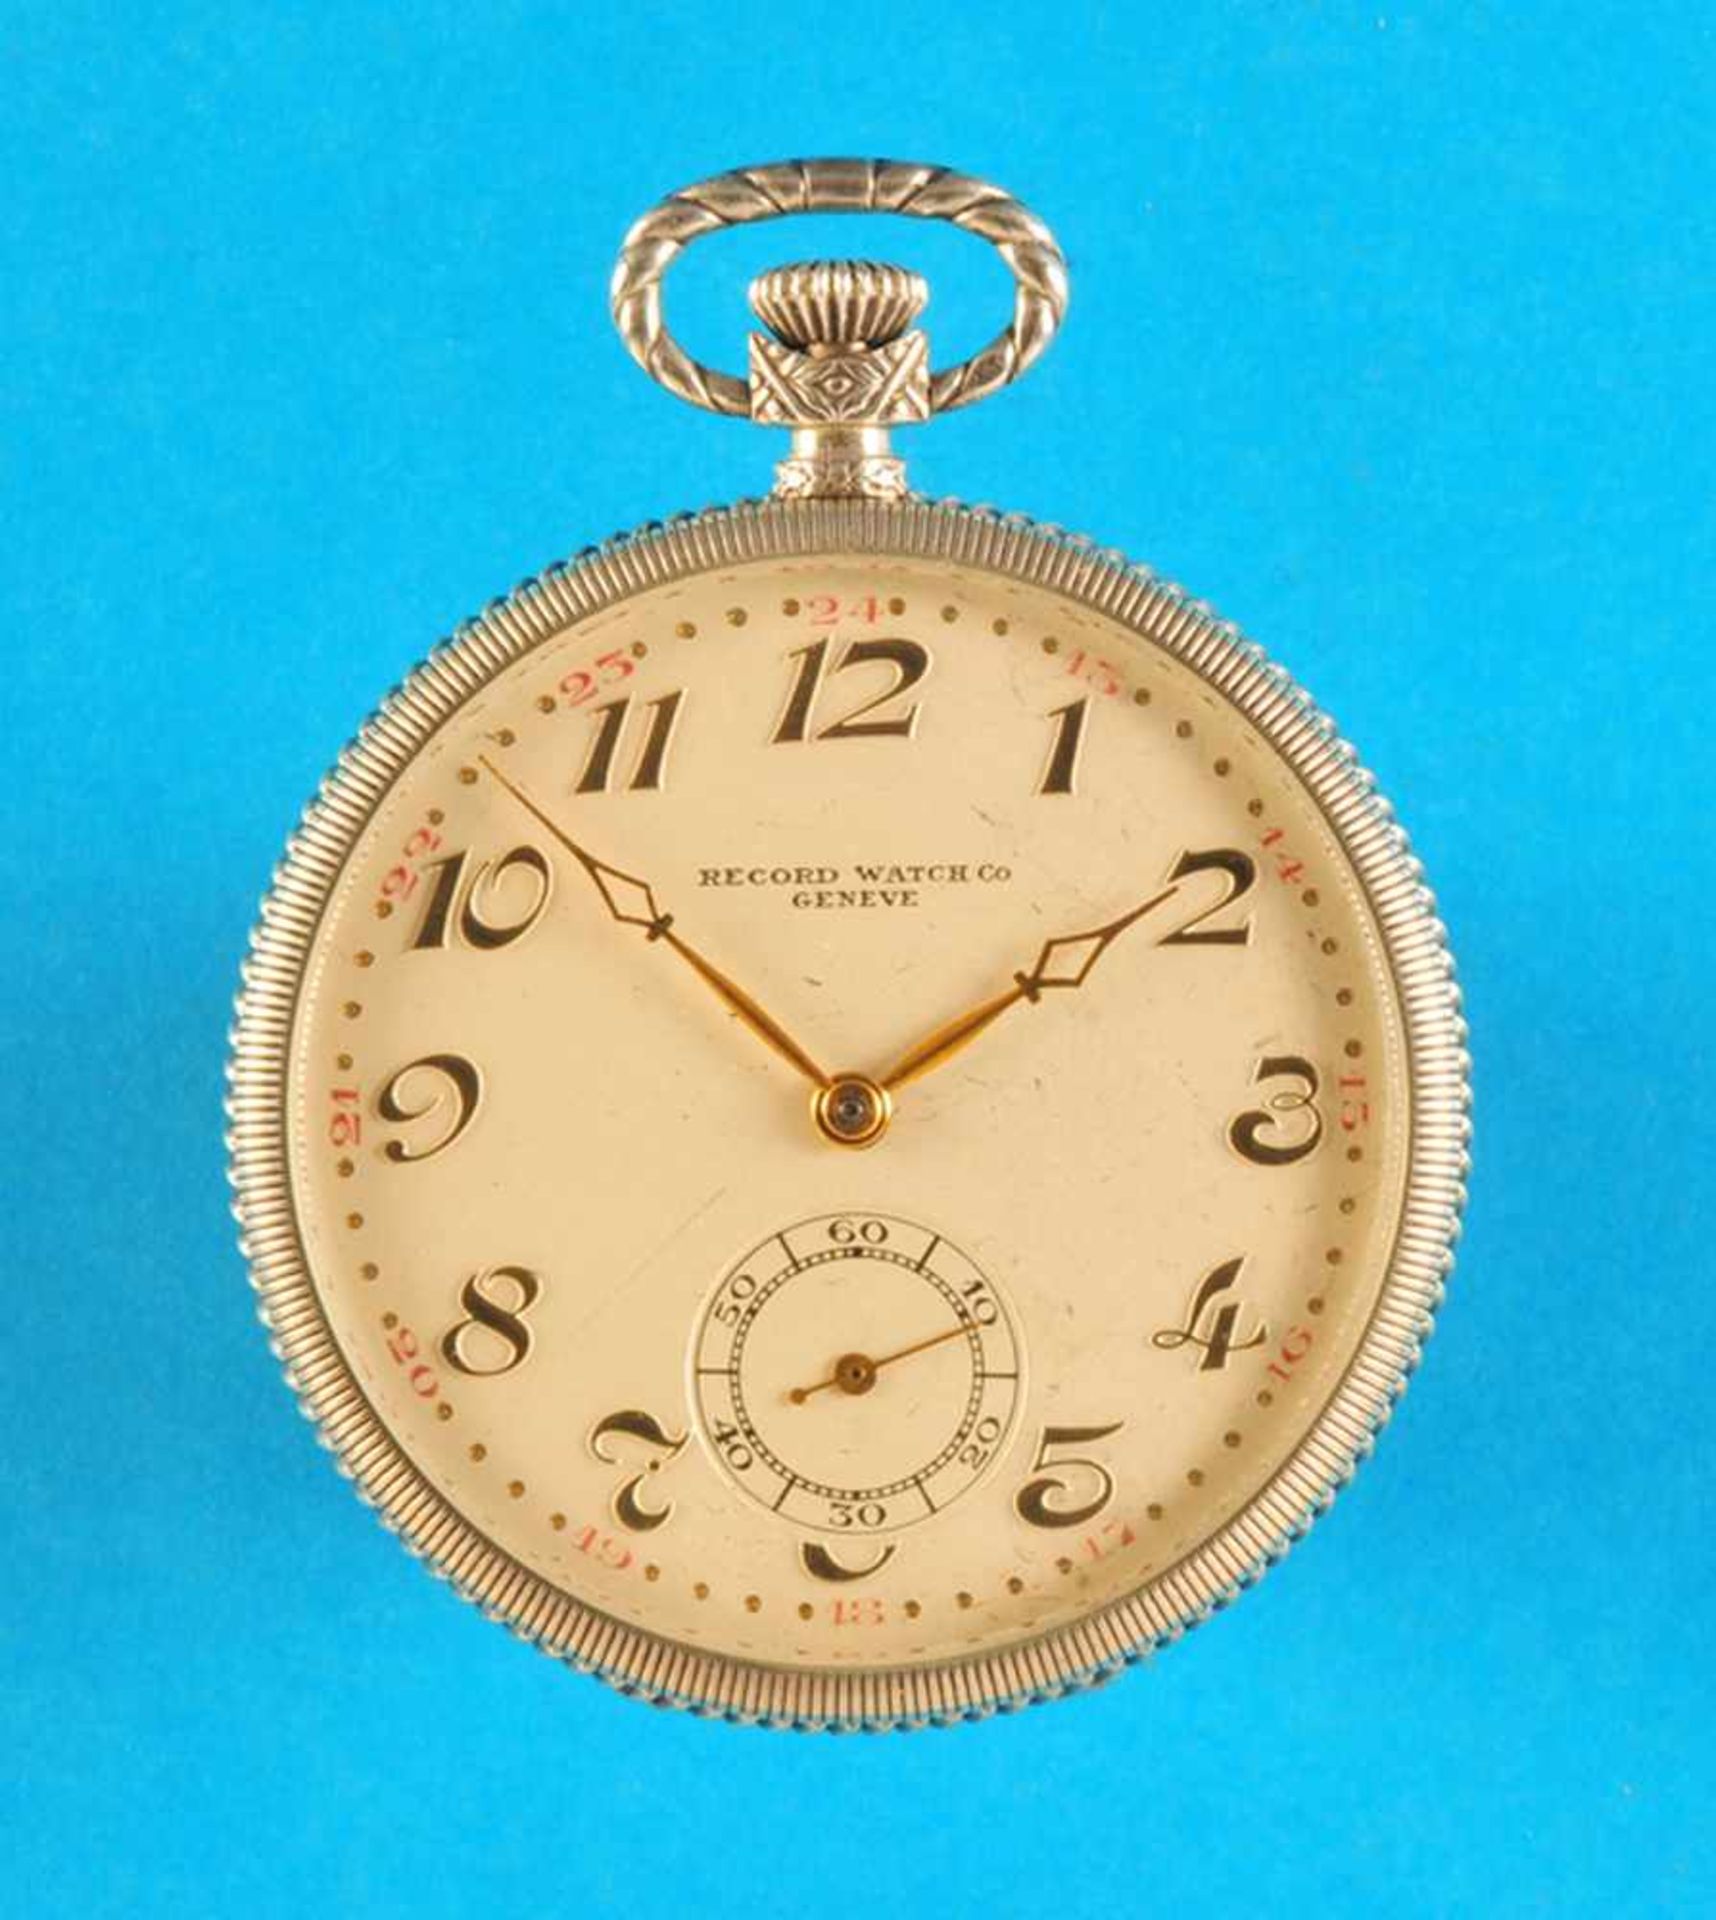 Record Watch Co. Genève, silver pocket watch<